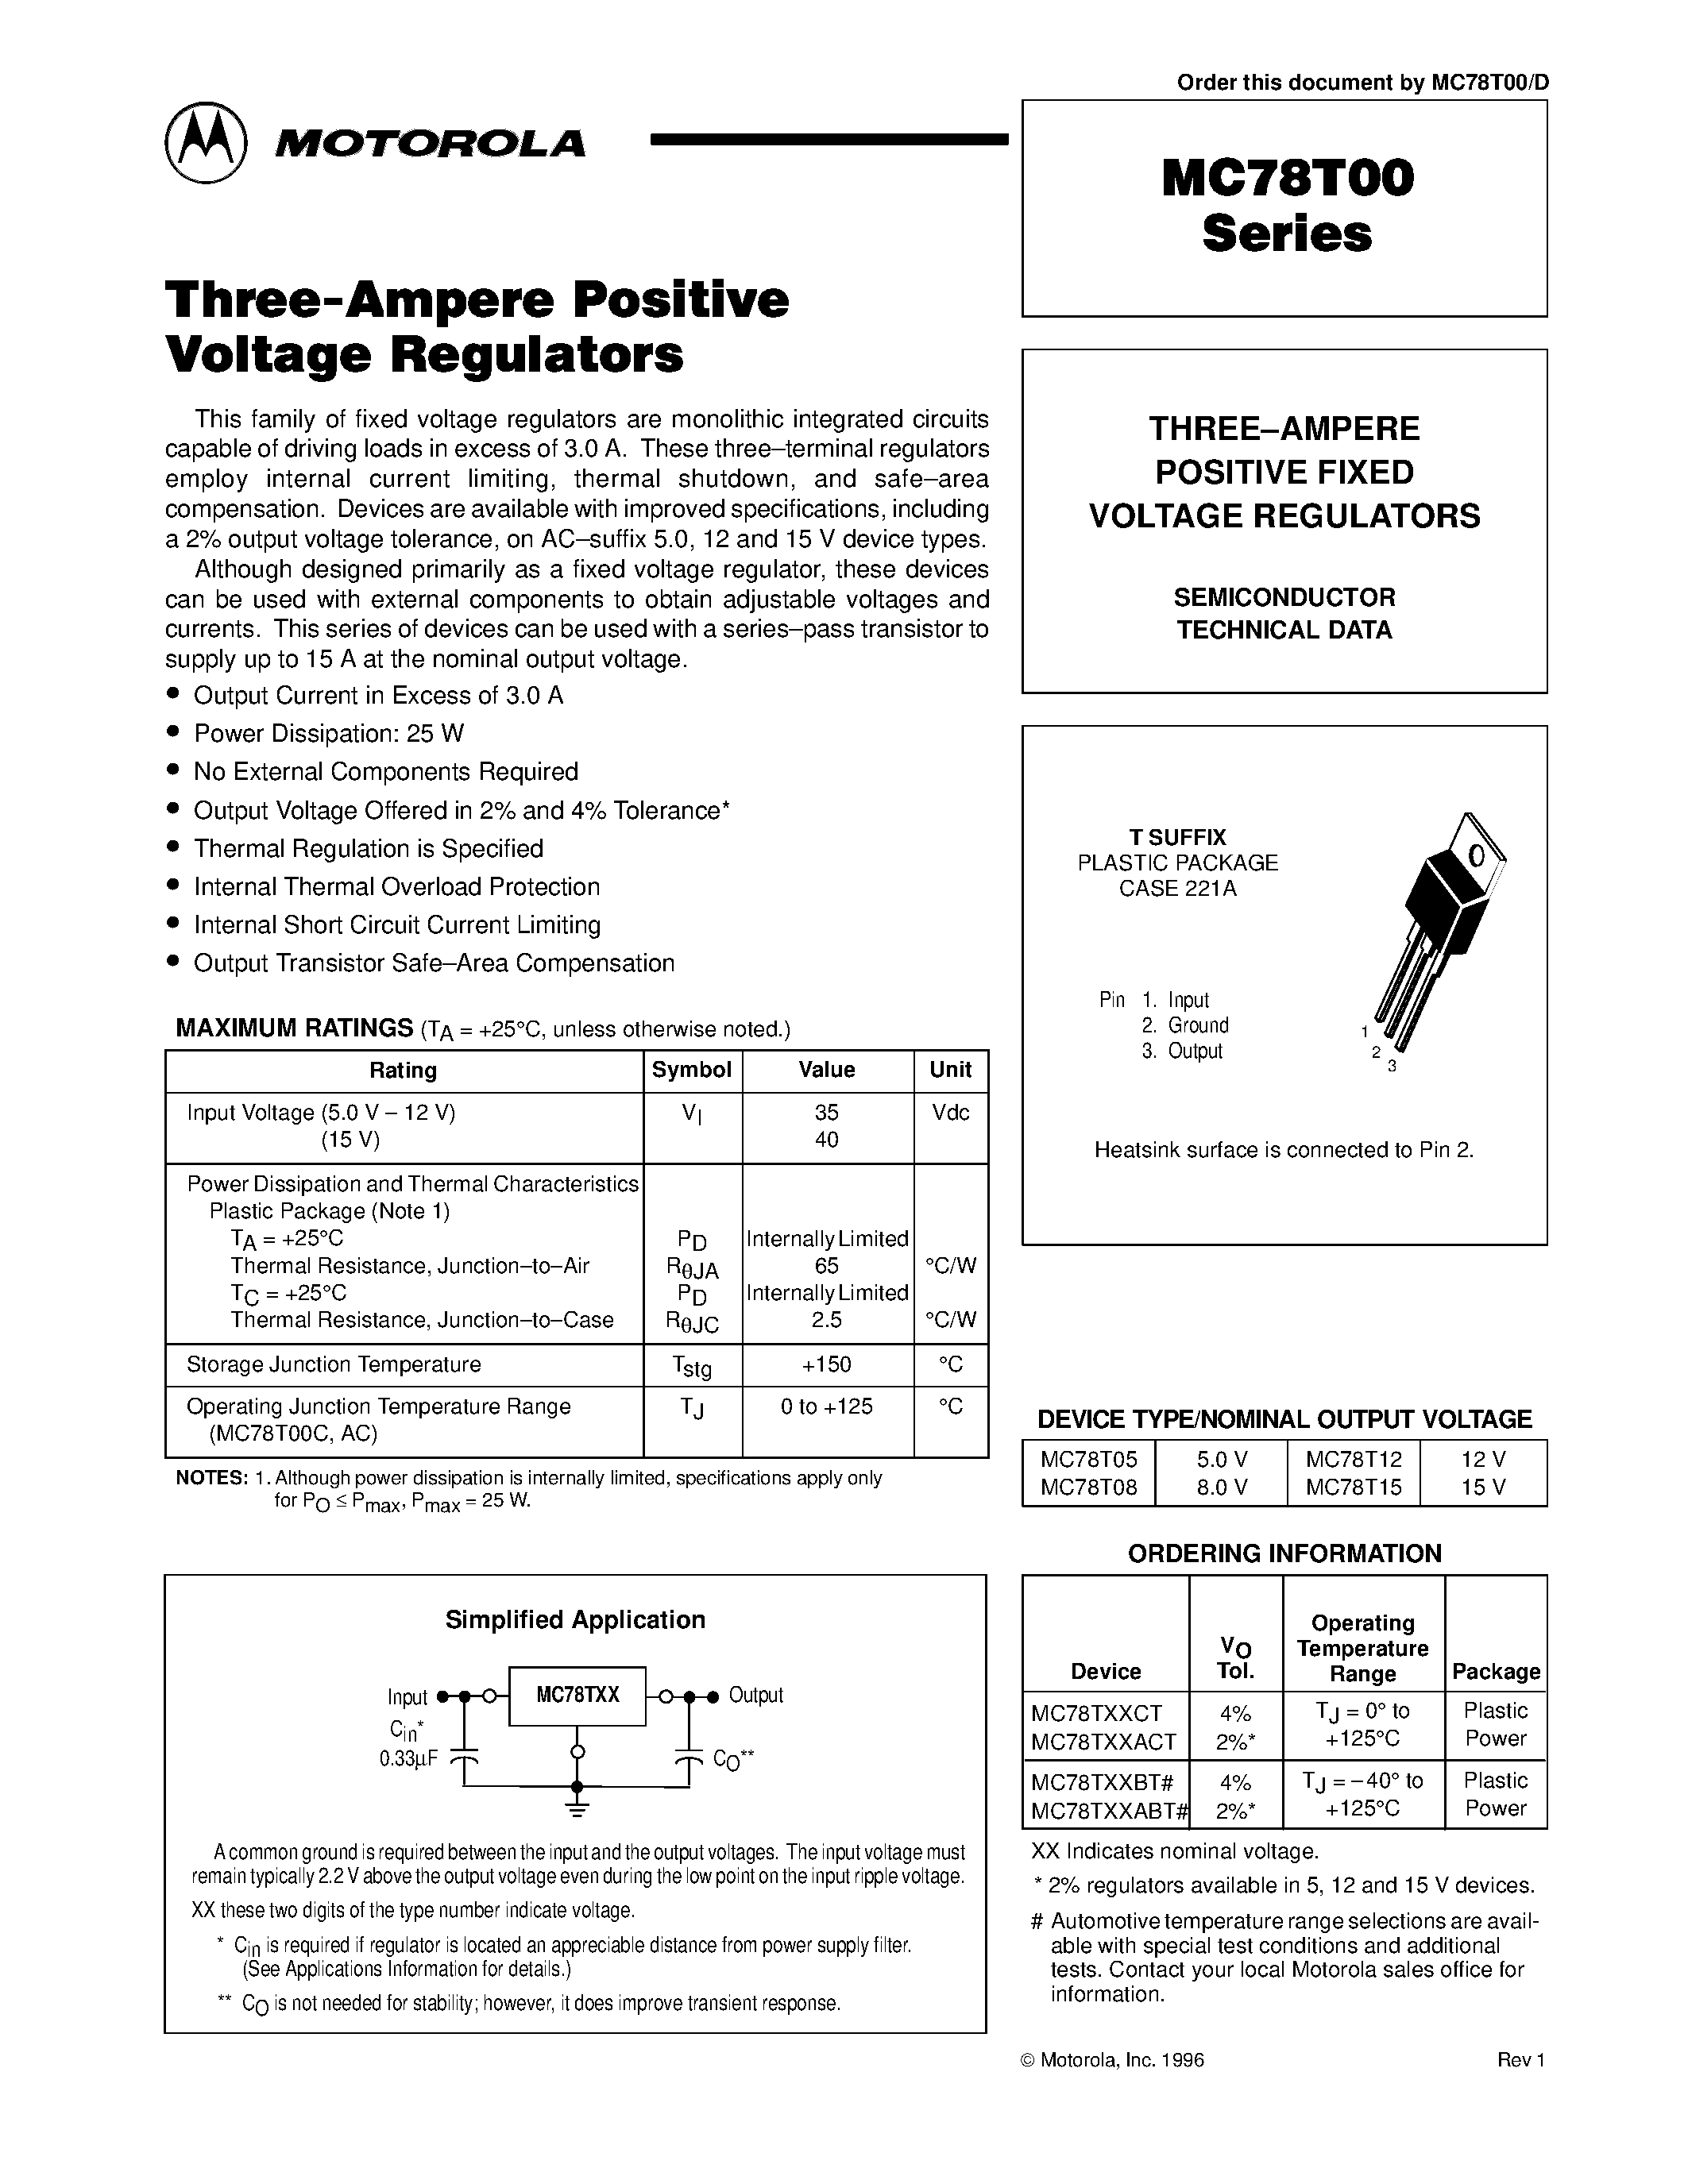 Даташит MC78T05ABT - THREE-AMPERE POSITIVE FIXED VOLTAGE REGULATORS страница 1